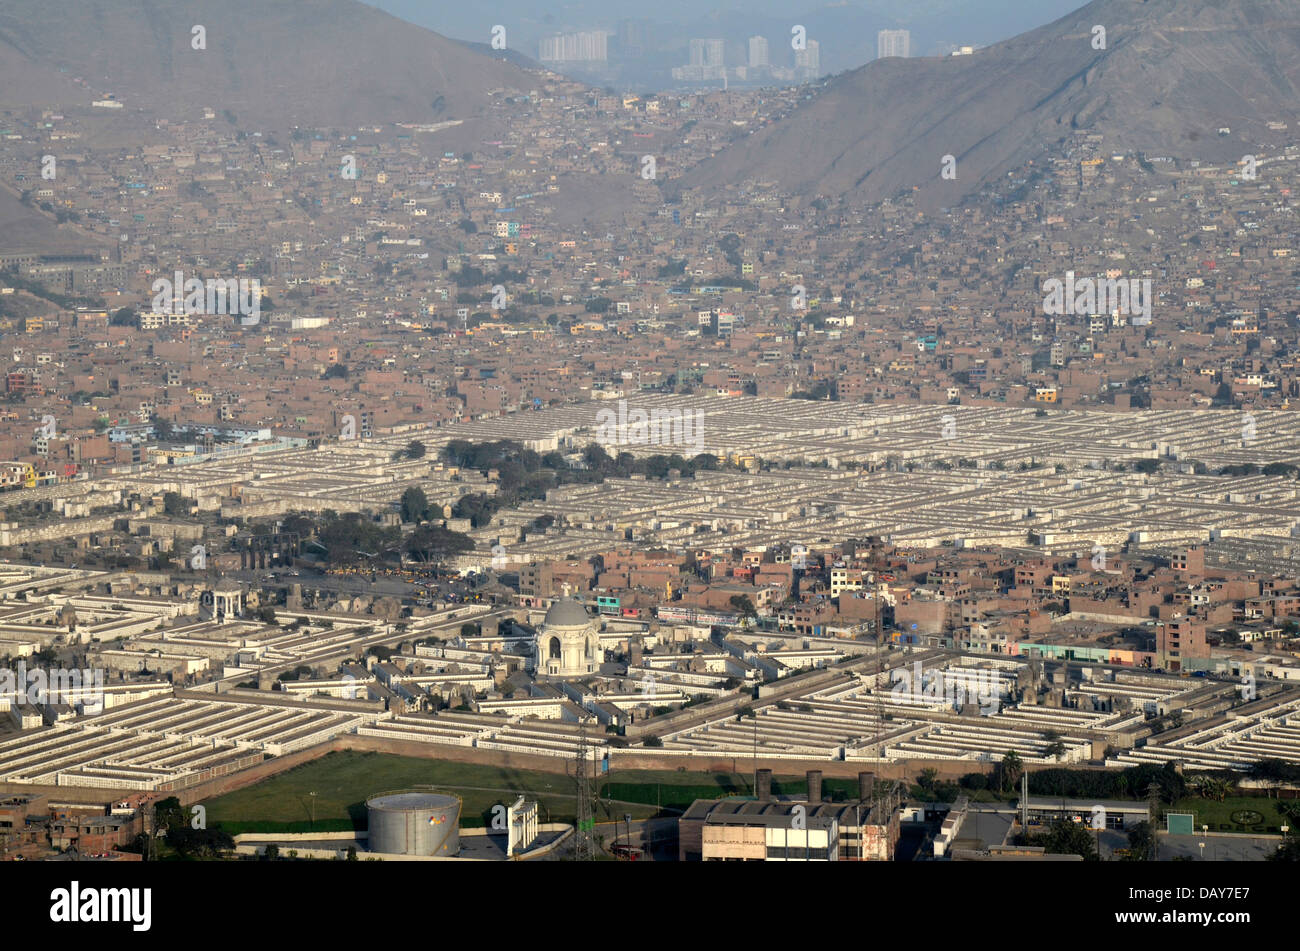 El agustino district,Lima city. Peru. Stock Photo